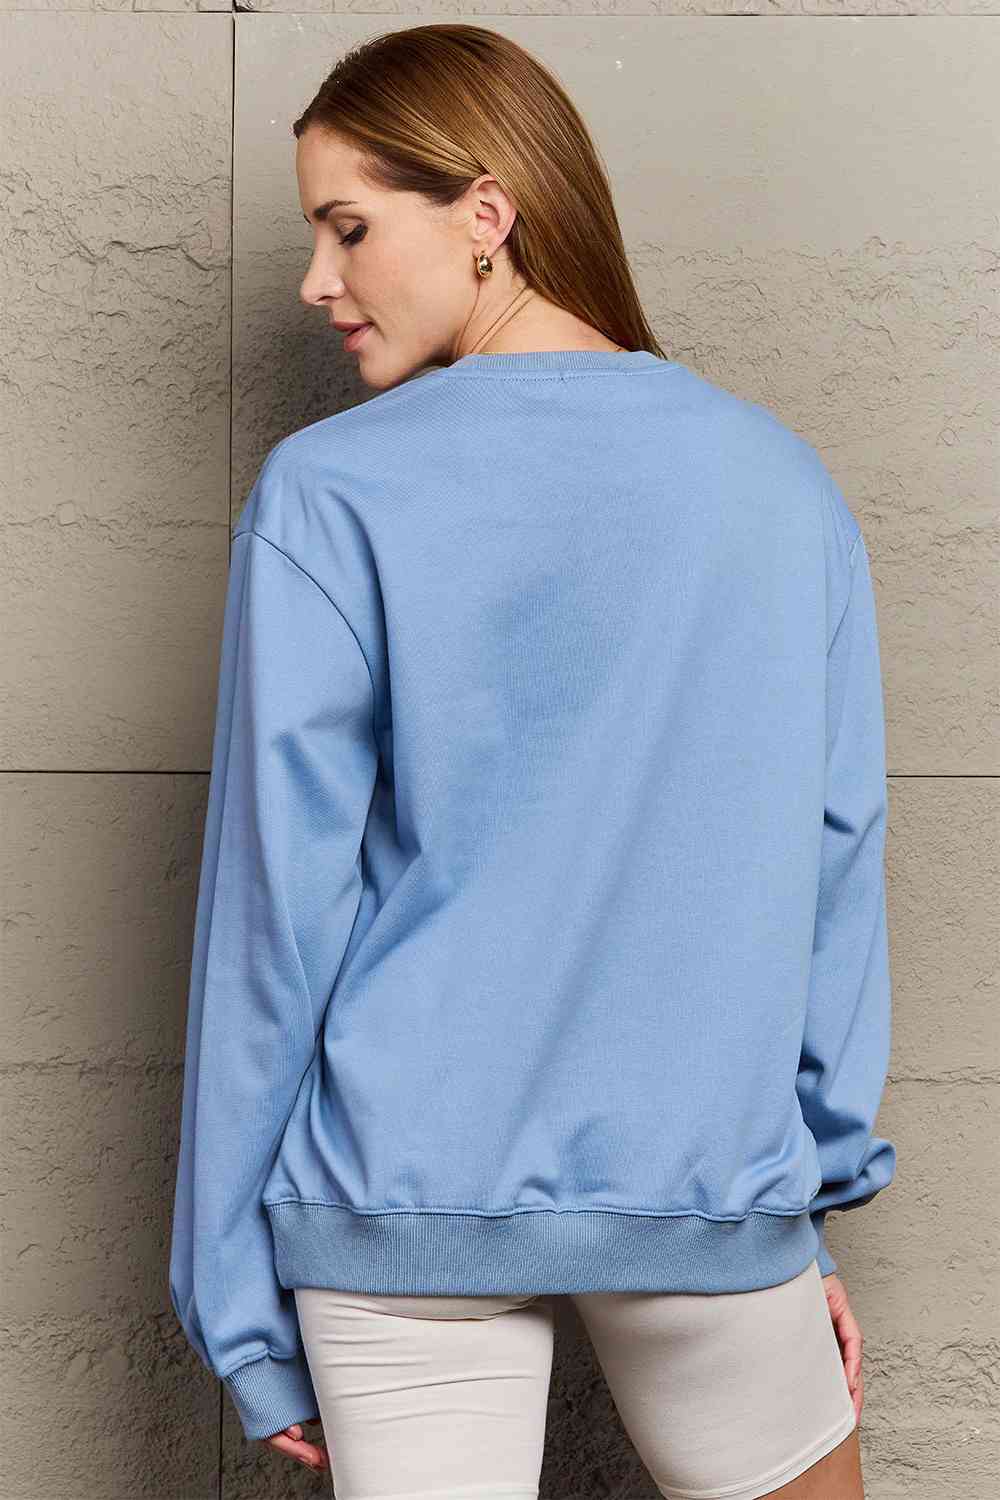 Simply Love Full Size Graphic Dropped Shoulder Sweatshirt, MyriadMart